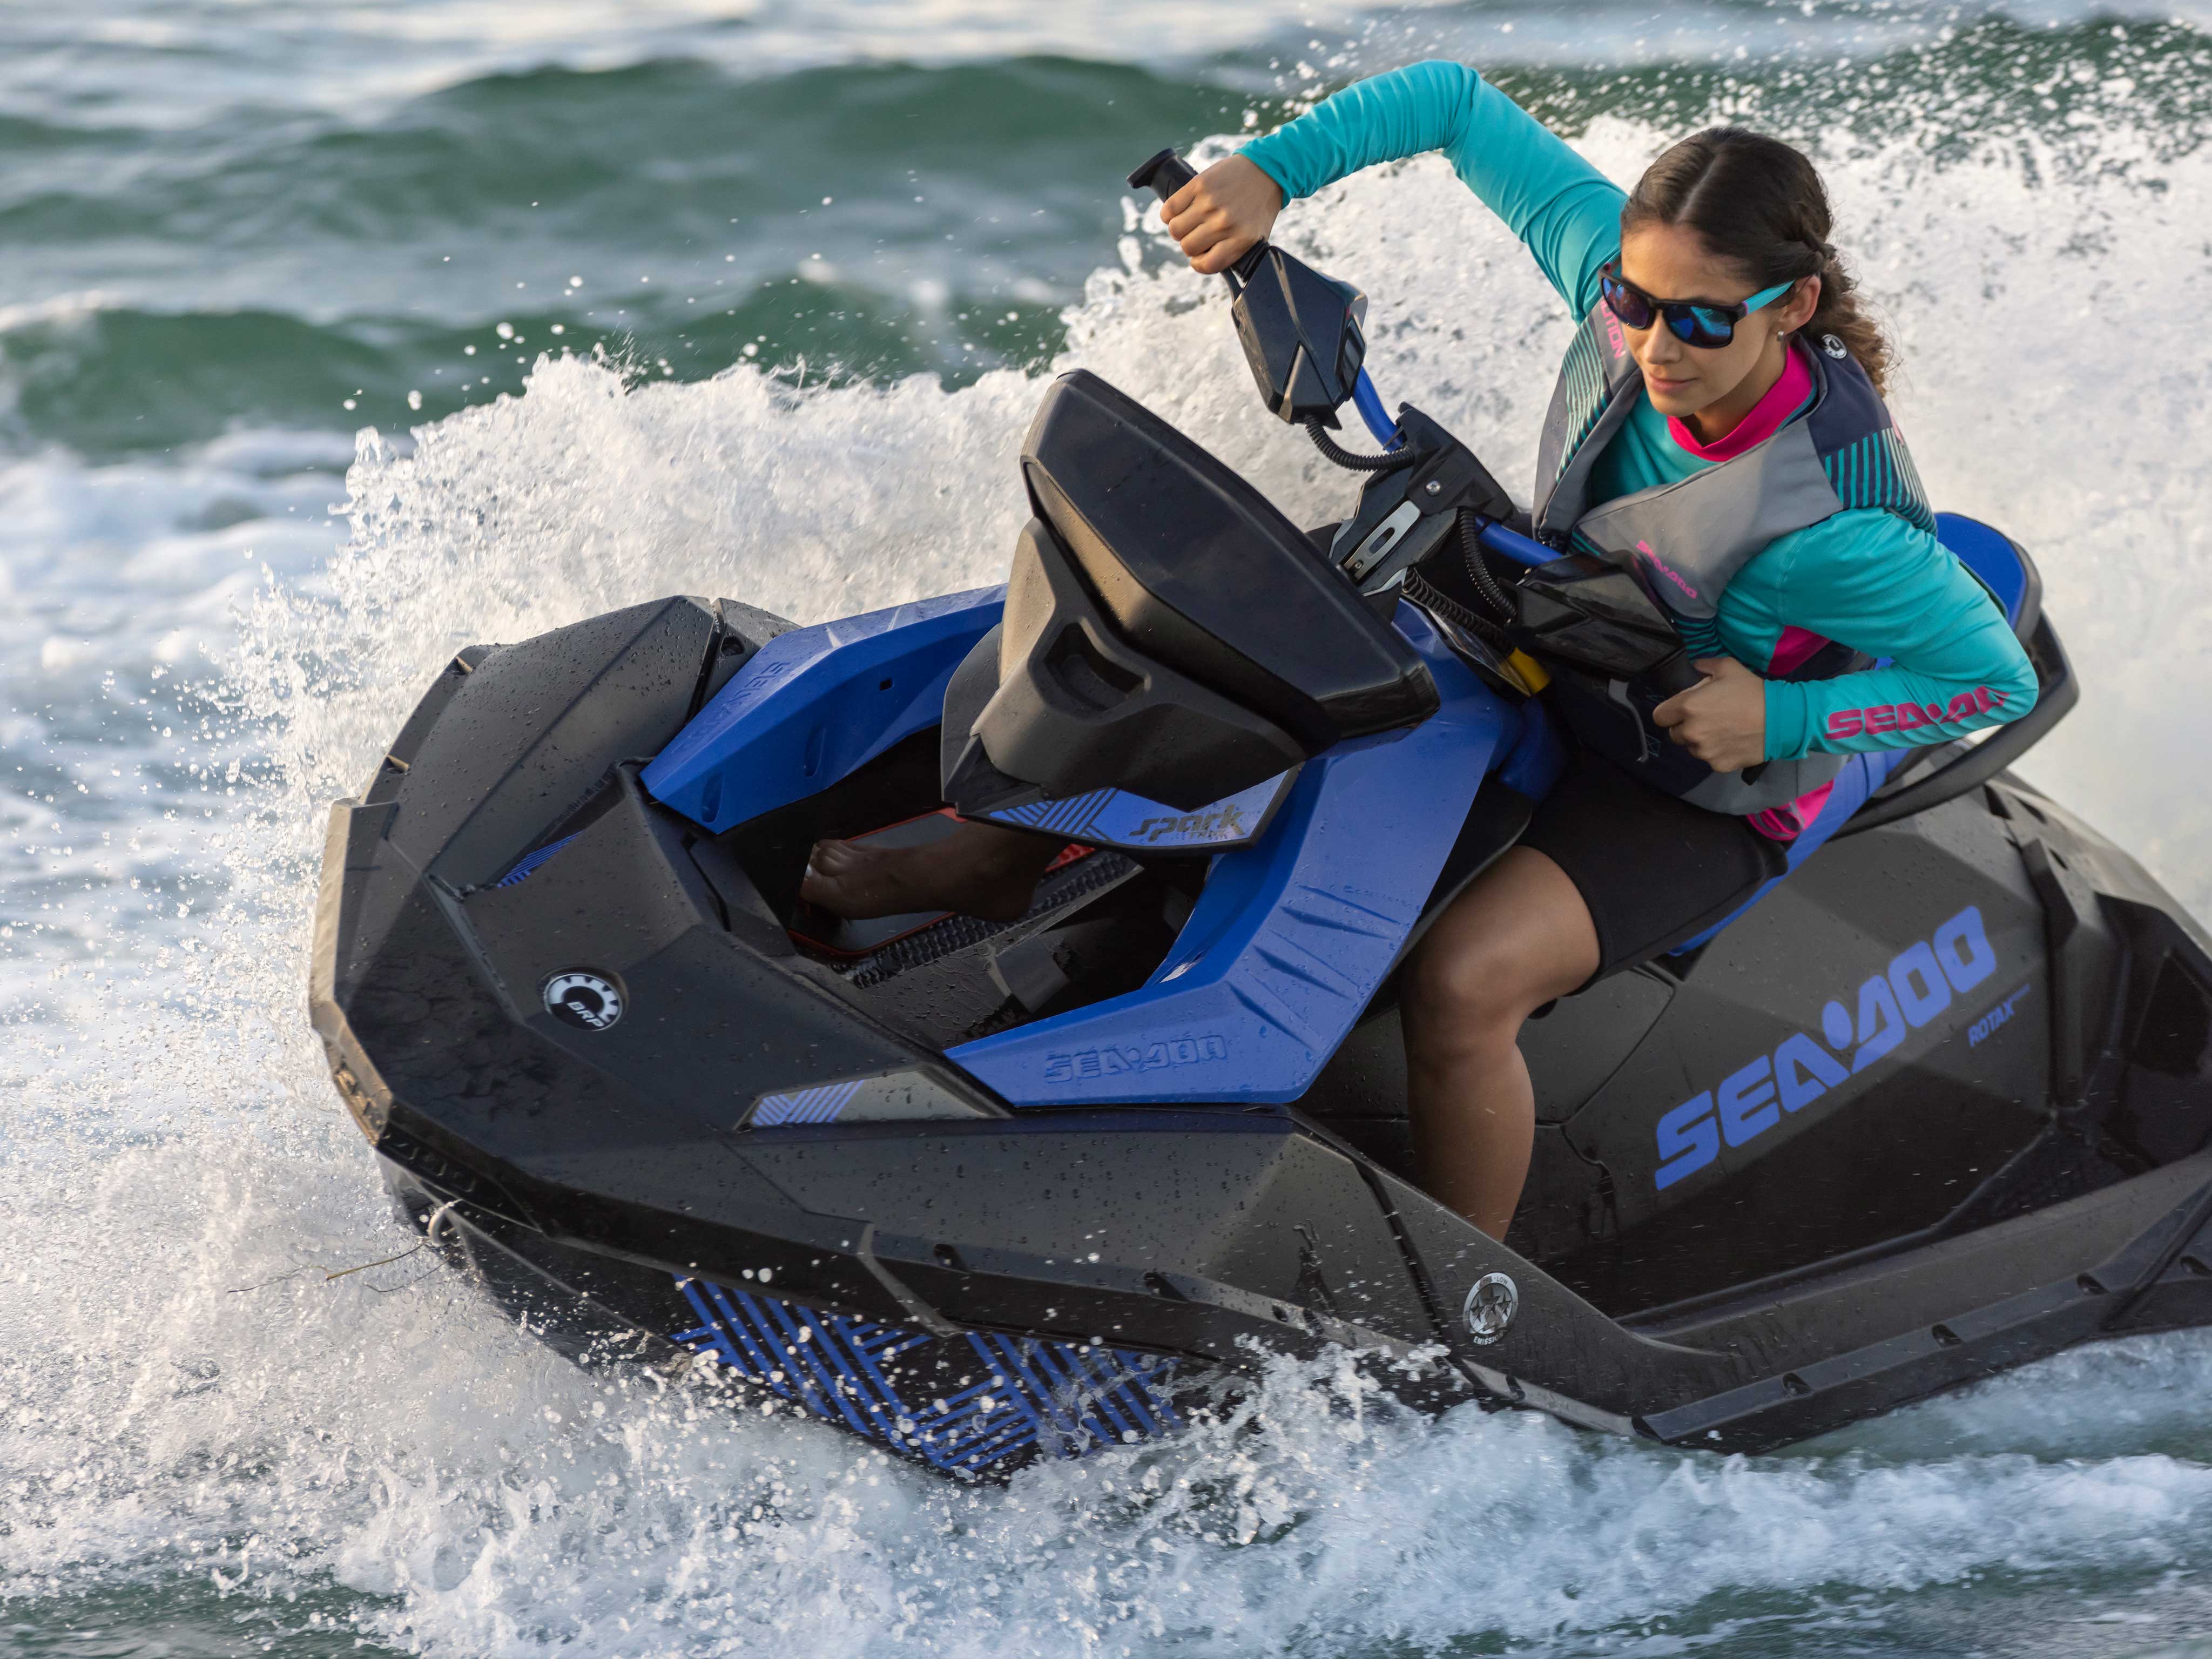 Sea-Doo Spark Trixx　2022年モデルで波を切って走るオーナーの女性